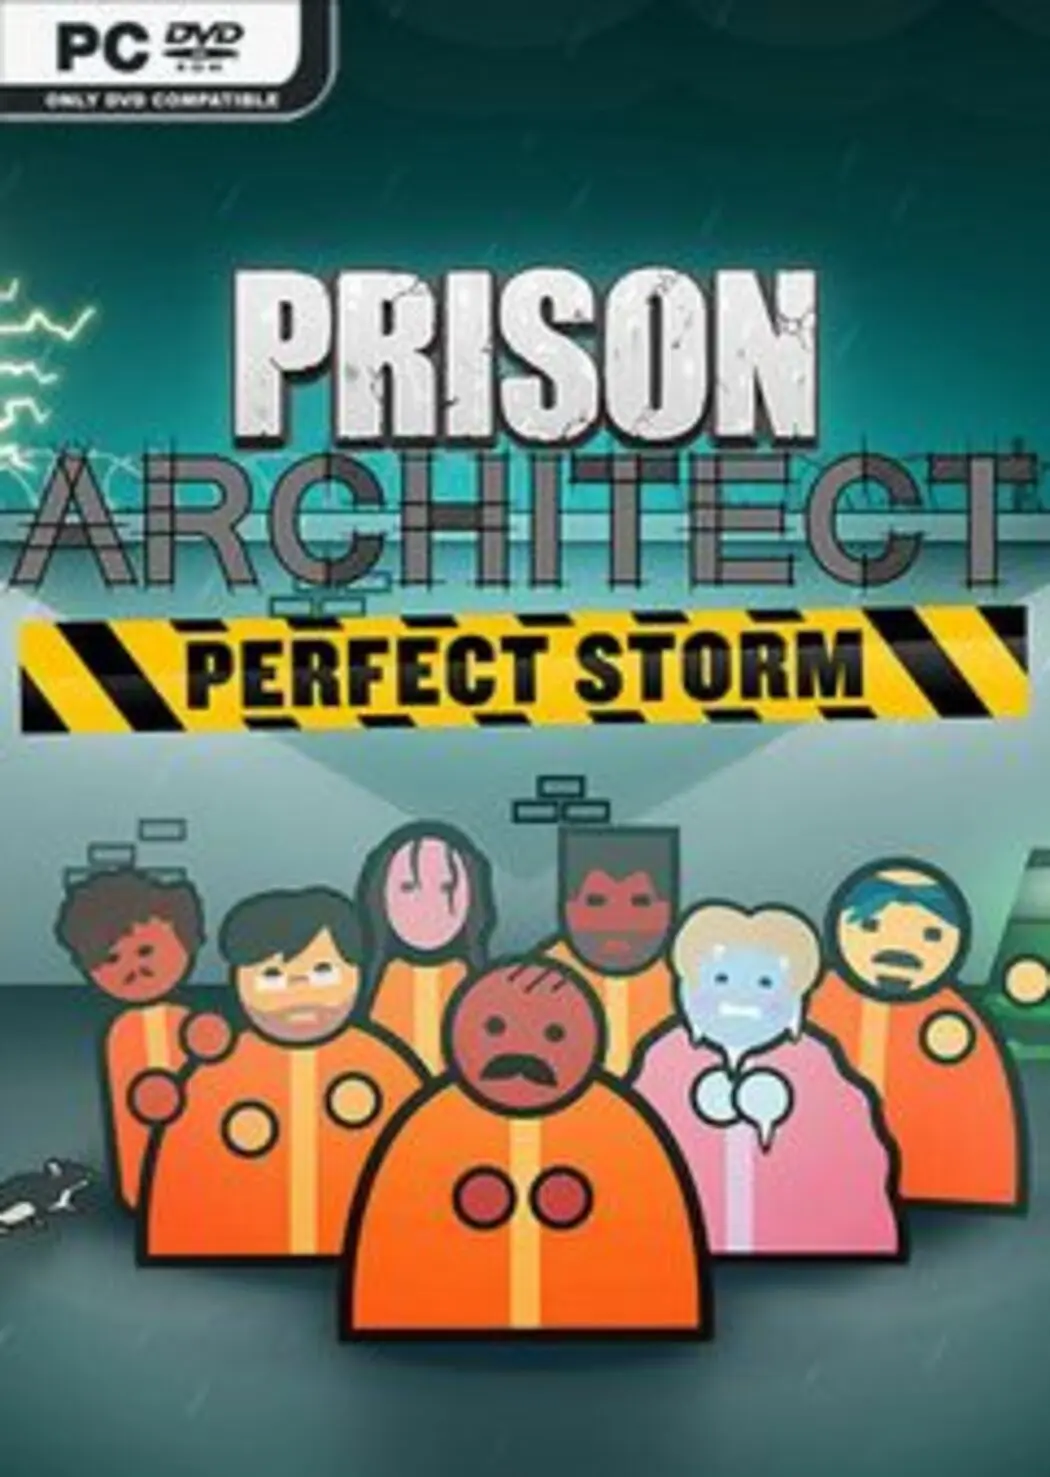 Prison Architect - Perfect Storm DLC (PC / Mac / Linux) - Steam - Digital Code